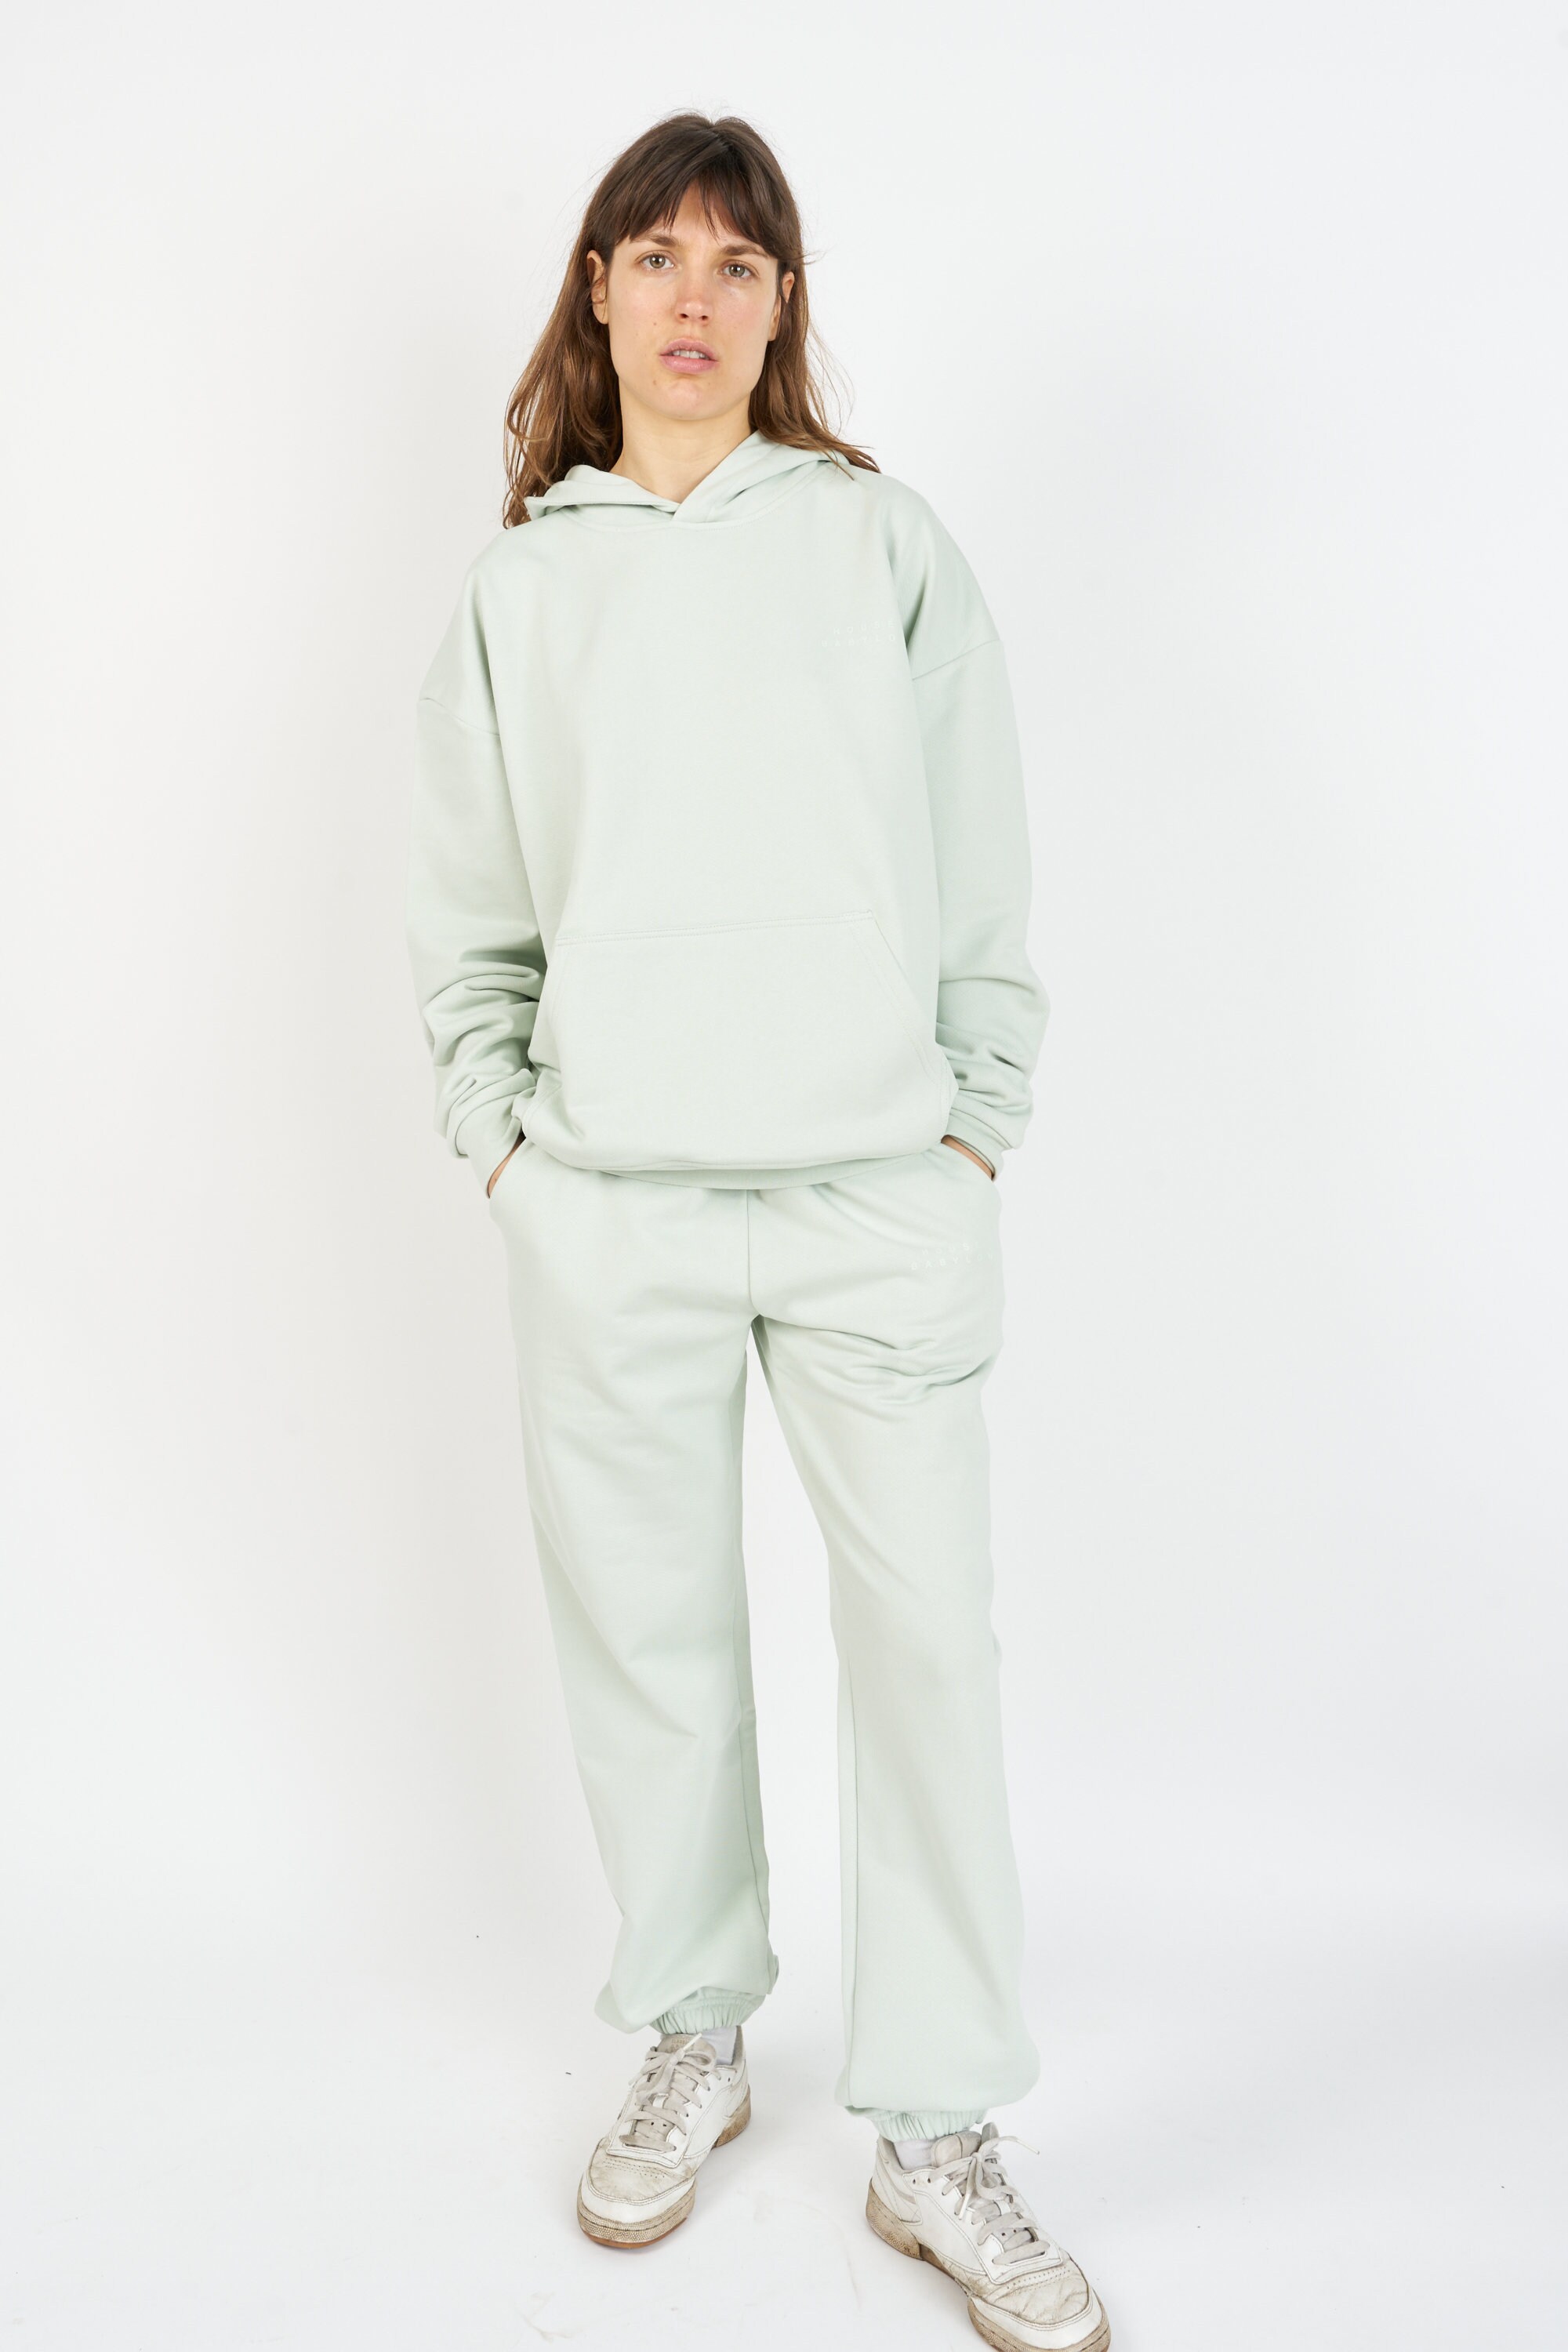 House Babylon Men’s Women’s Pyjama Set Cotton Loungewear Sleepwear Hooded Top & Bottom Sets Light Green